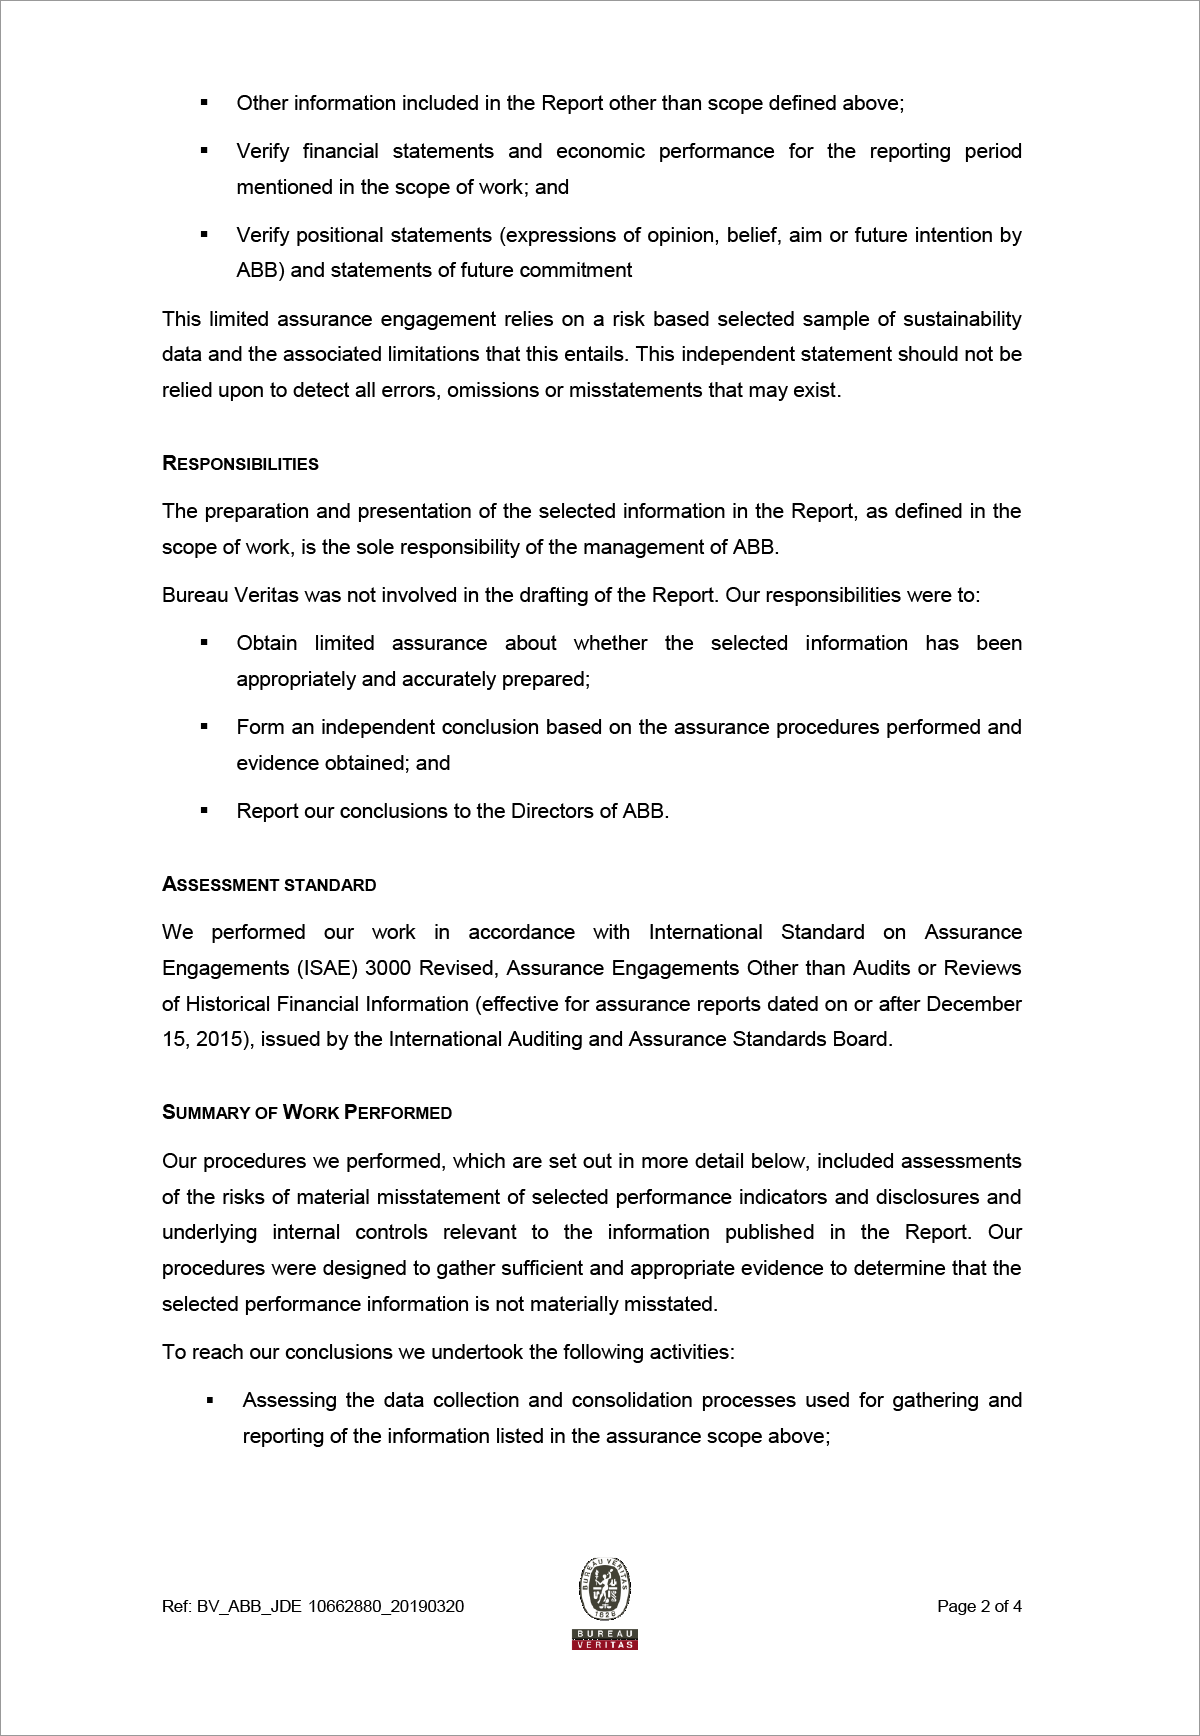 Bureau Veritas assurance statement– page 2 of 4 (document)